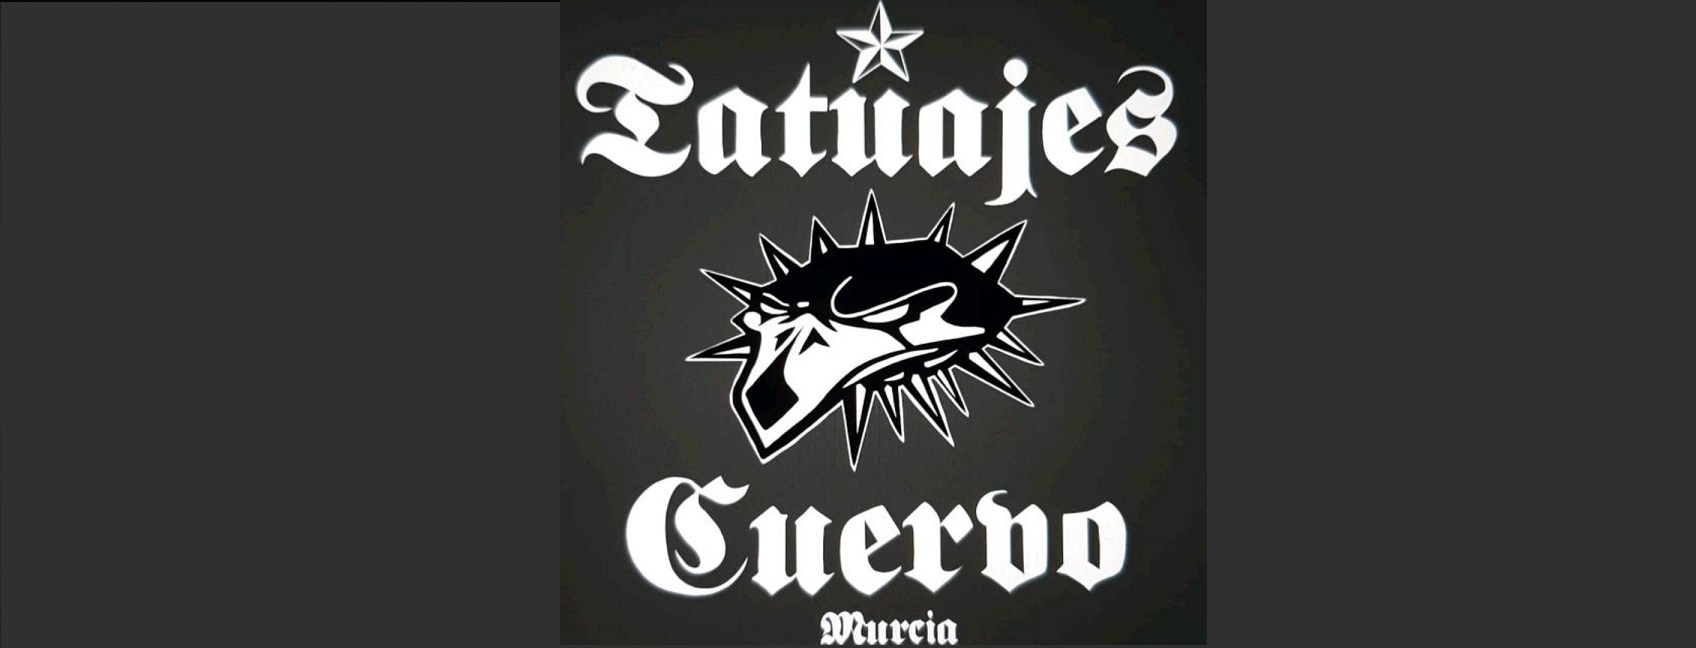 tatuajes cuervo new logo